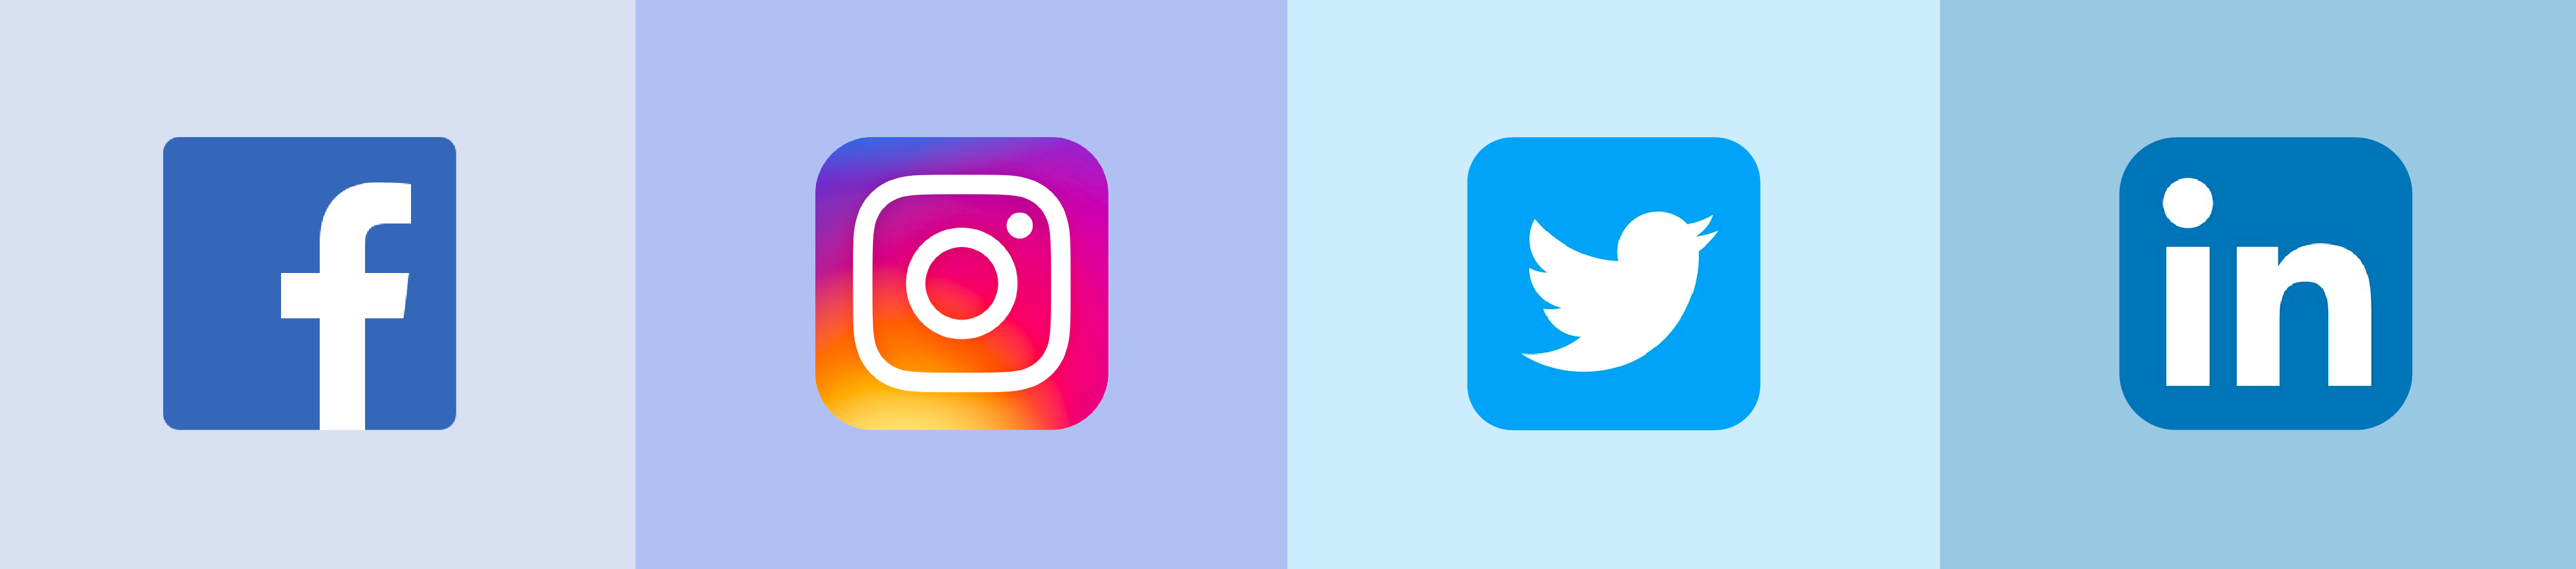 social media icons: facebook., instagram, twitter and linkedin